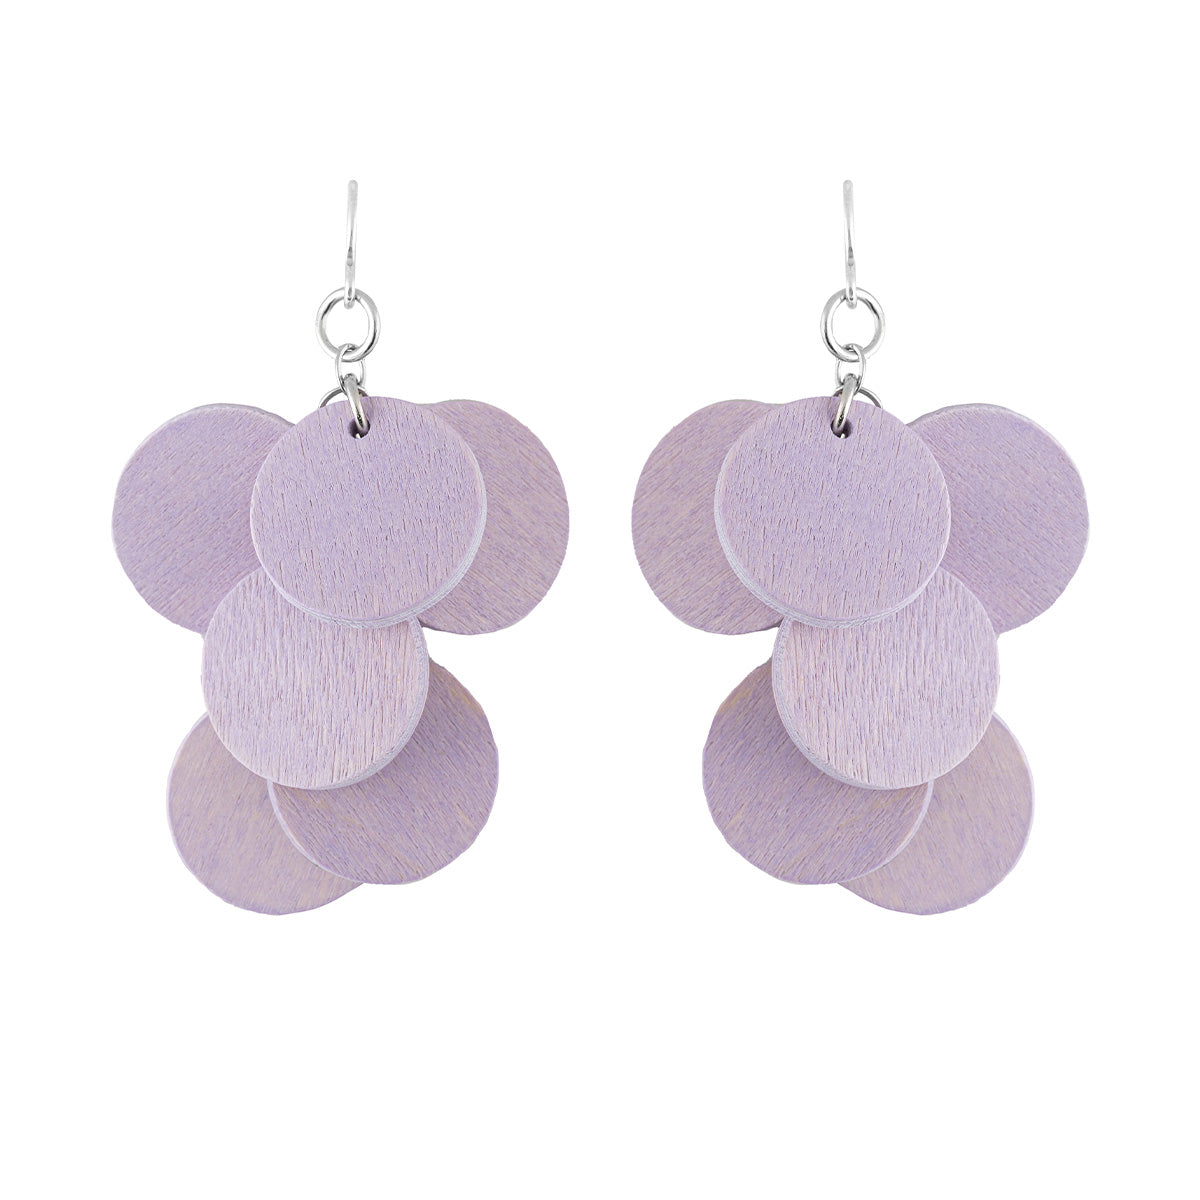 Juolukka earrings, lavender